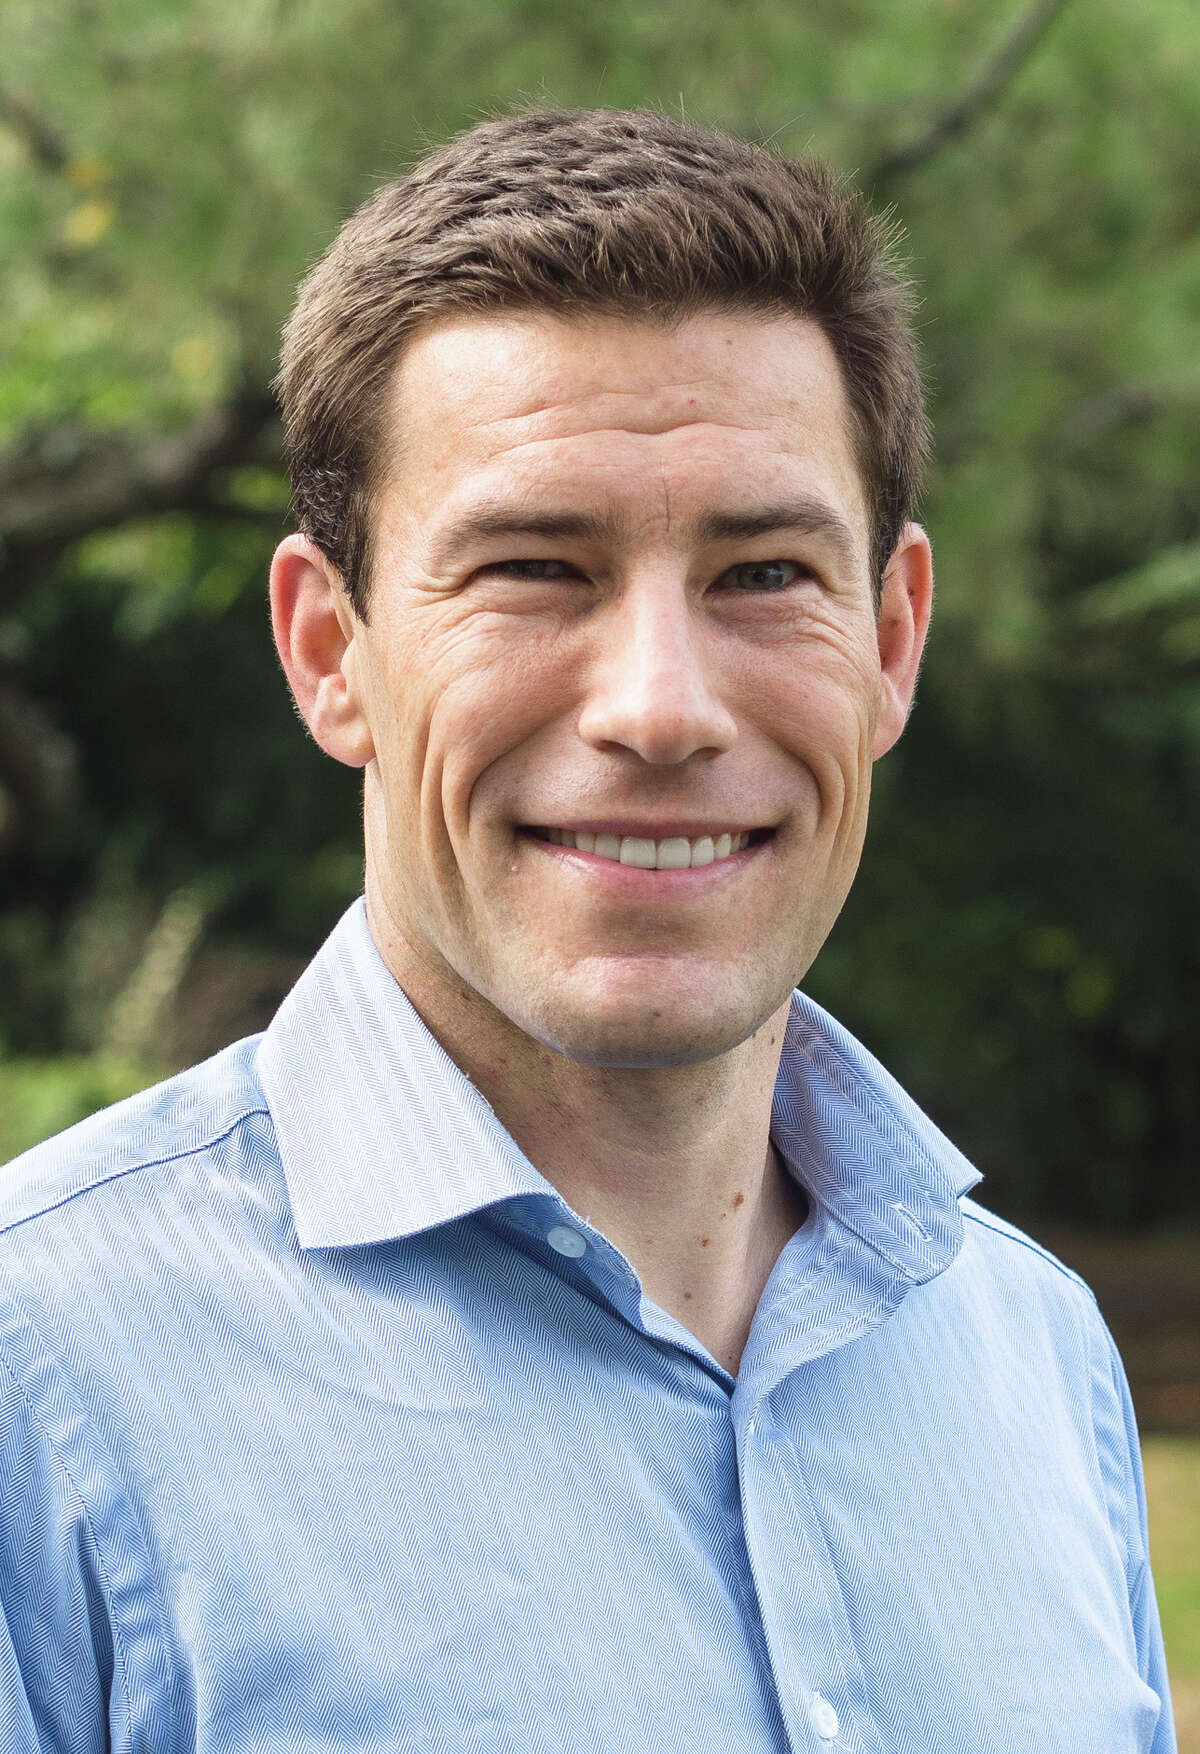 Blake Benke, Democratic candidate for Westport Board of Finance. Westport CT. October 2013.